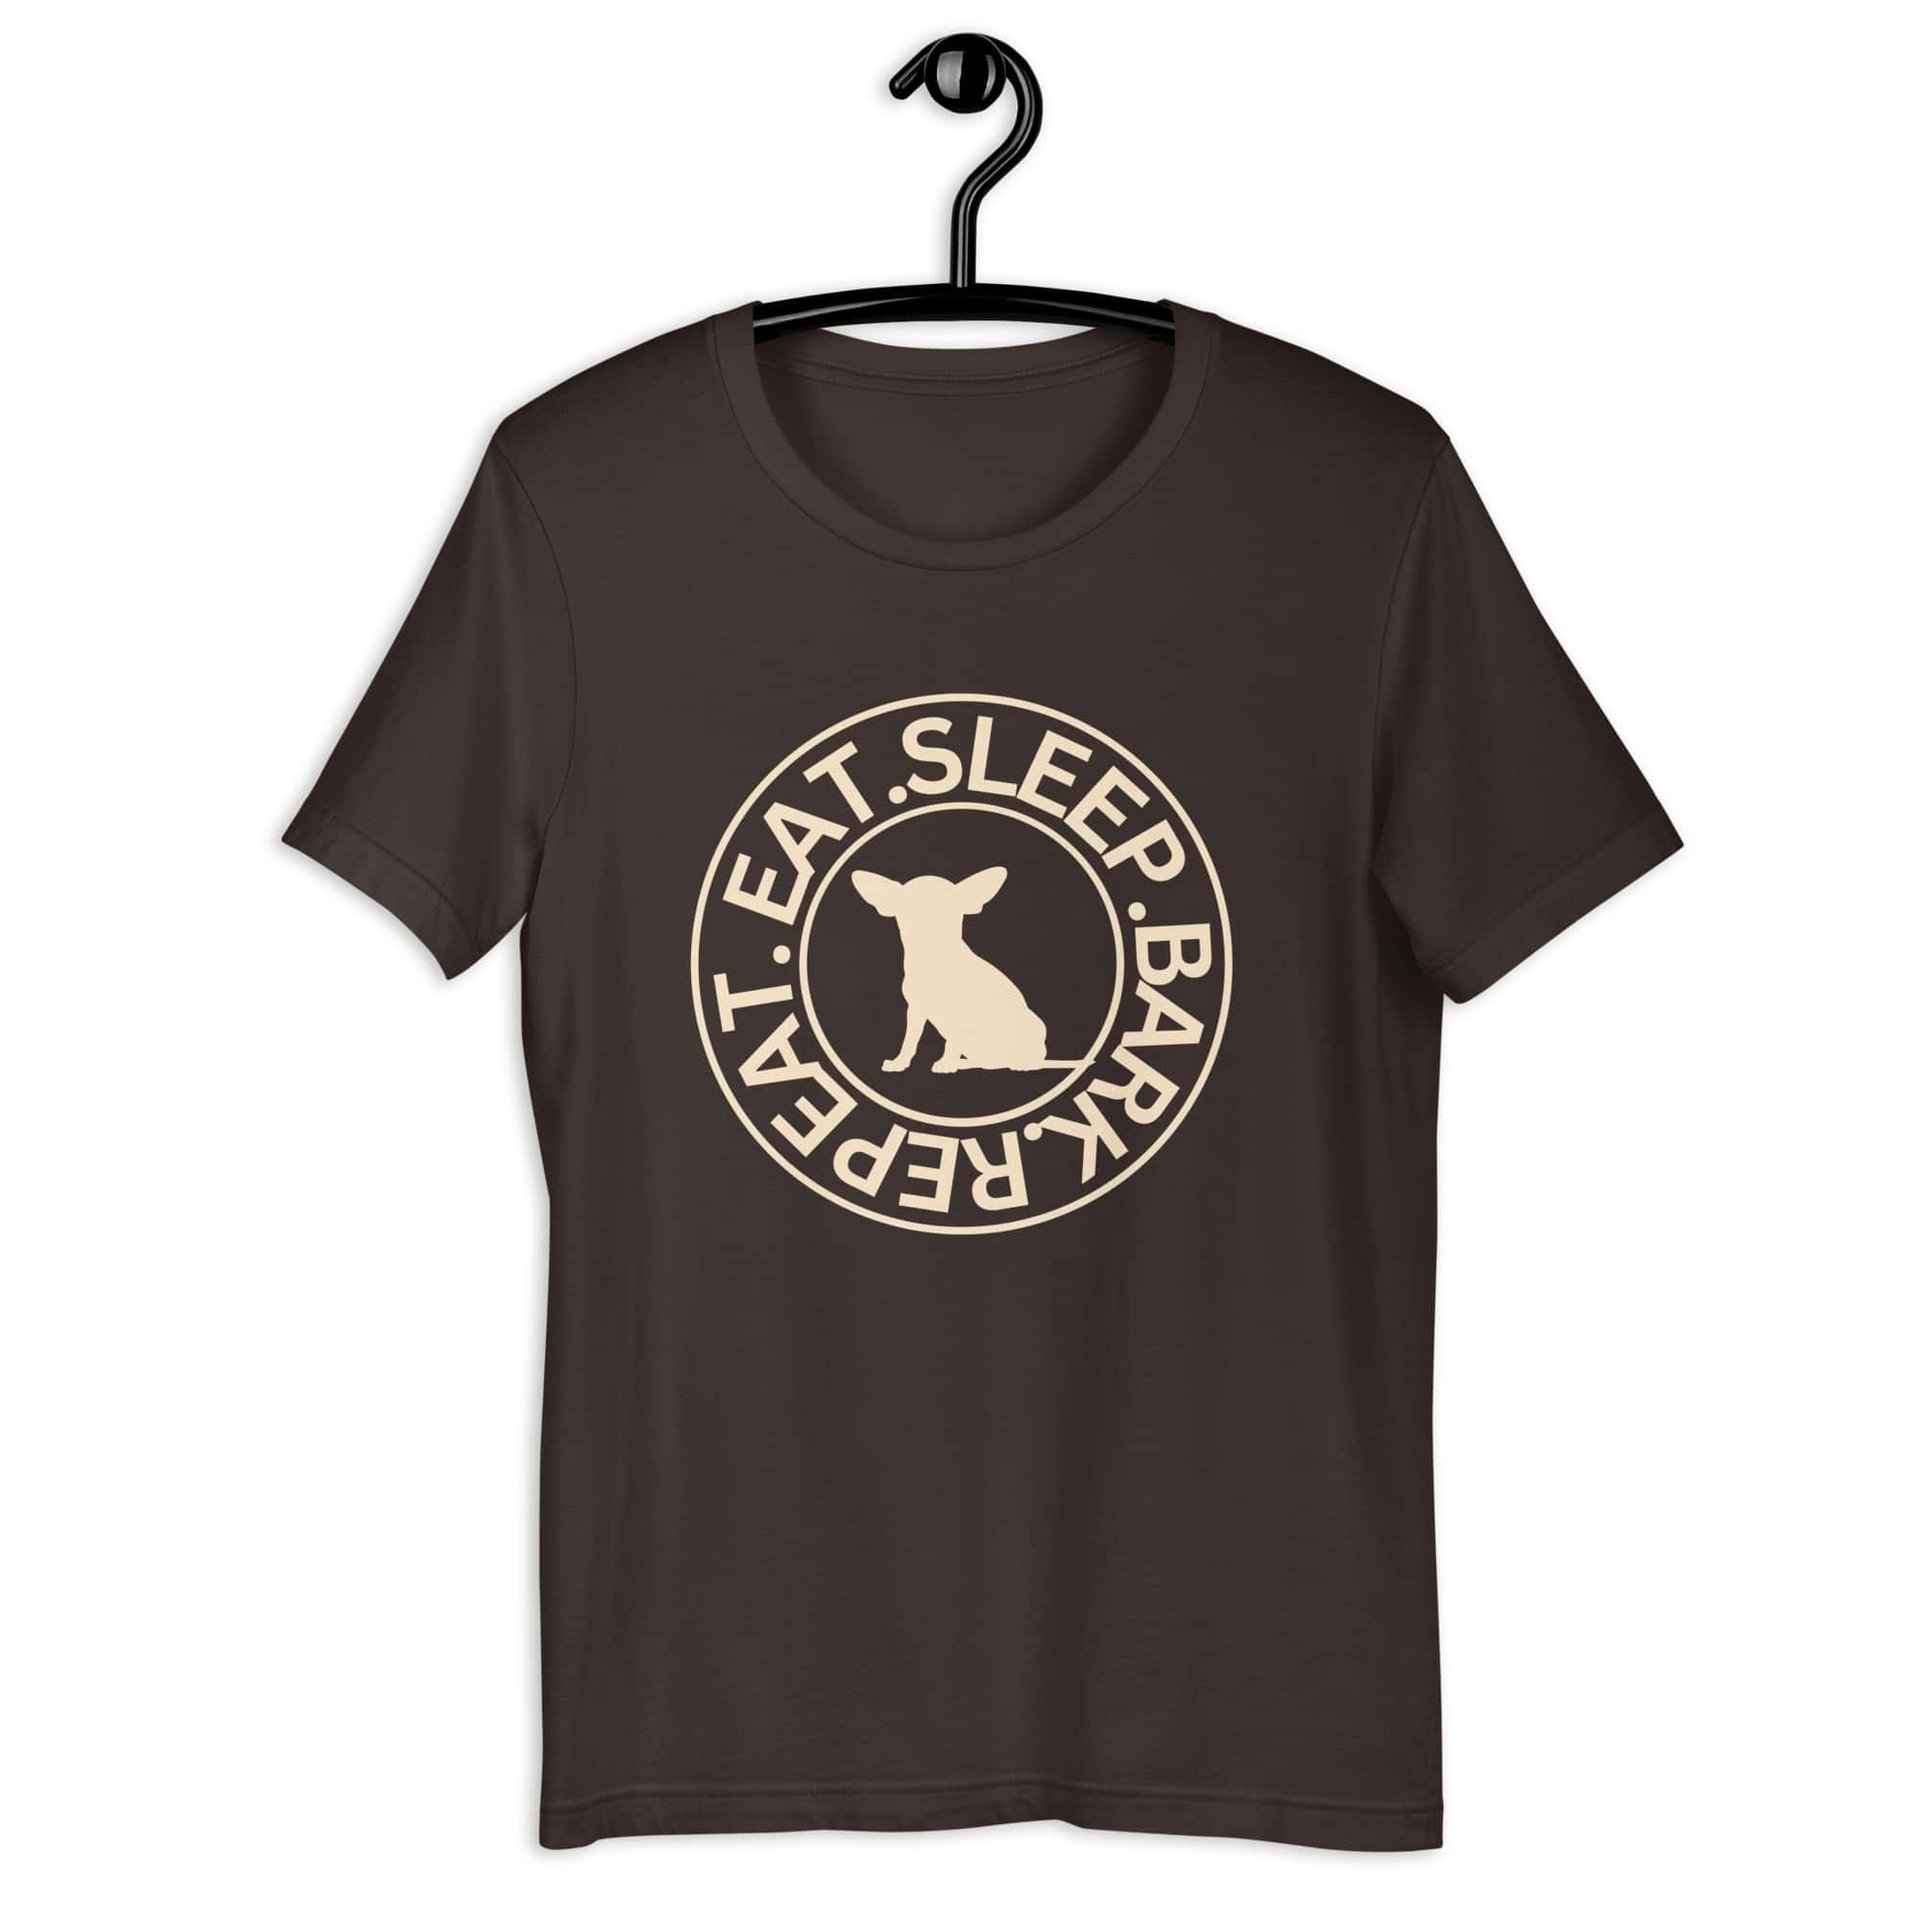 Eat Sleep Bark Repeat Chihuahua Unisex T-Shirt. Brown